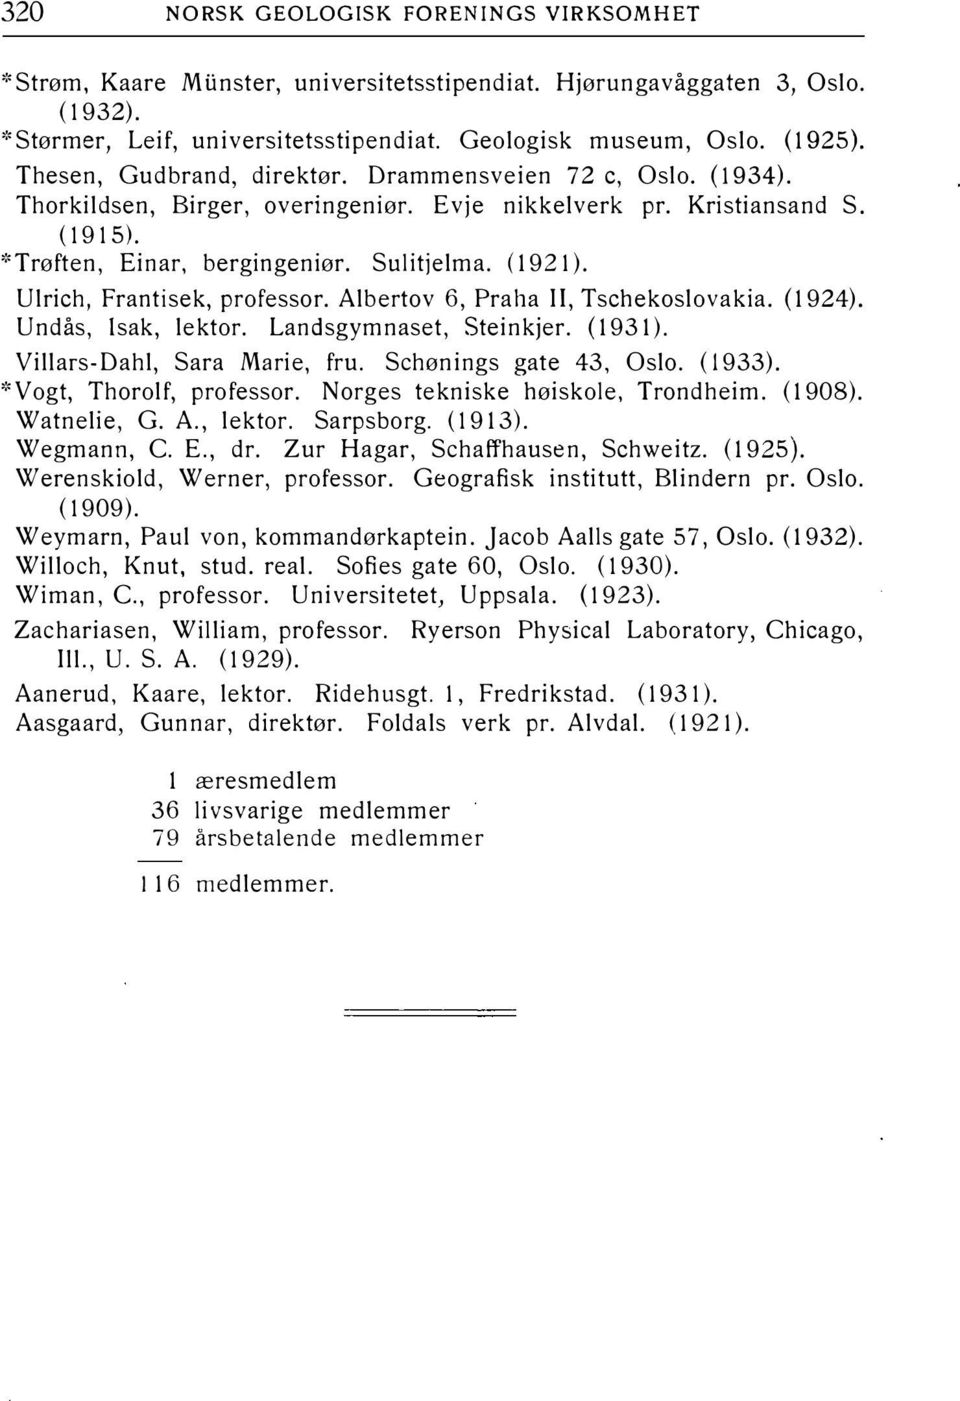 Ulrich, Frantisek, professor. Albertov 6, Praha Il, Tschekoslovakia. (1924). Undås, Isak, lektor. Landsgymnaset, Steinkjer. (1931 ). Villars-Dahl, Sara Marie, fru. Schønings gate 43, Oslo. ( 1933).